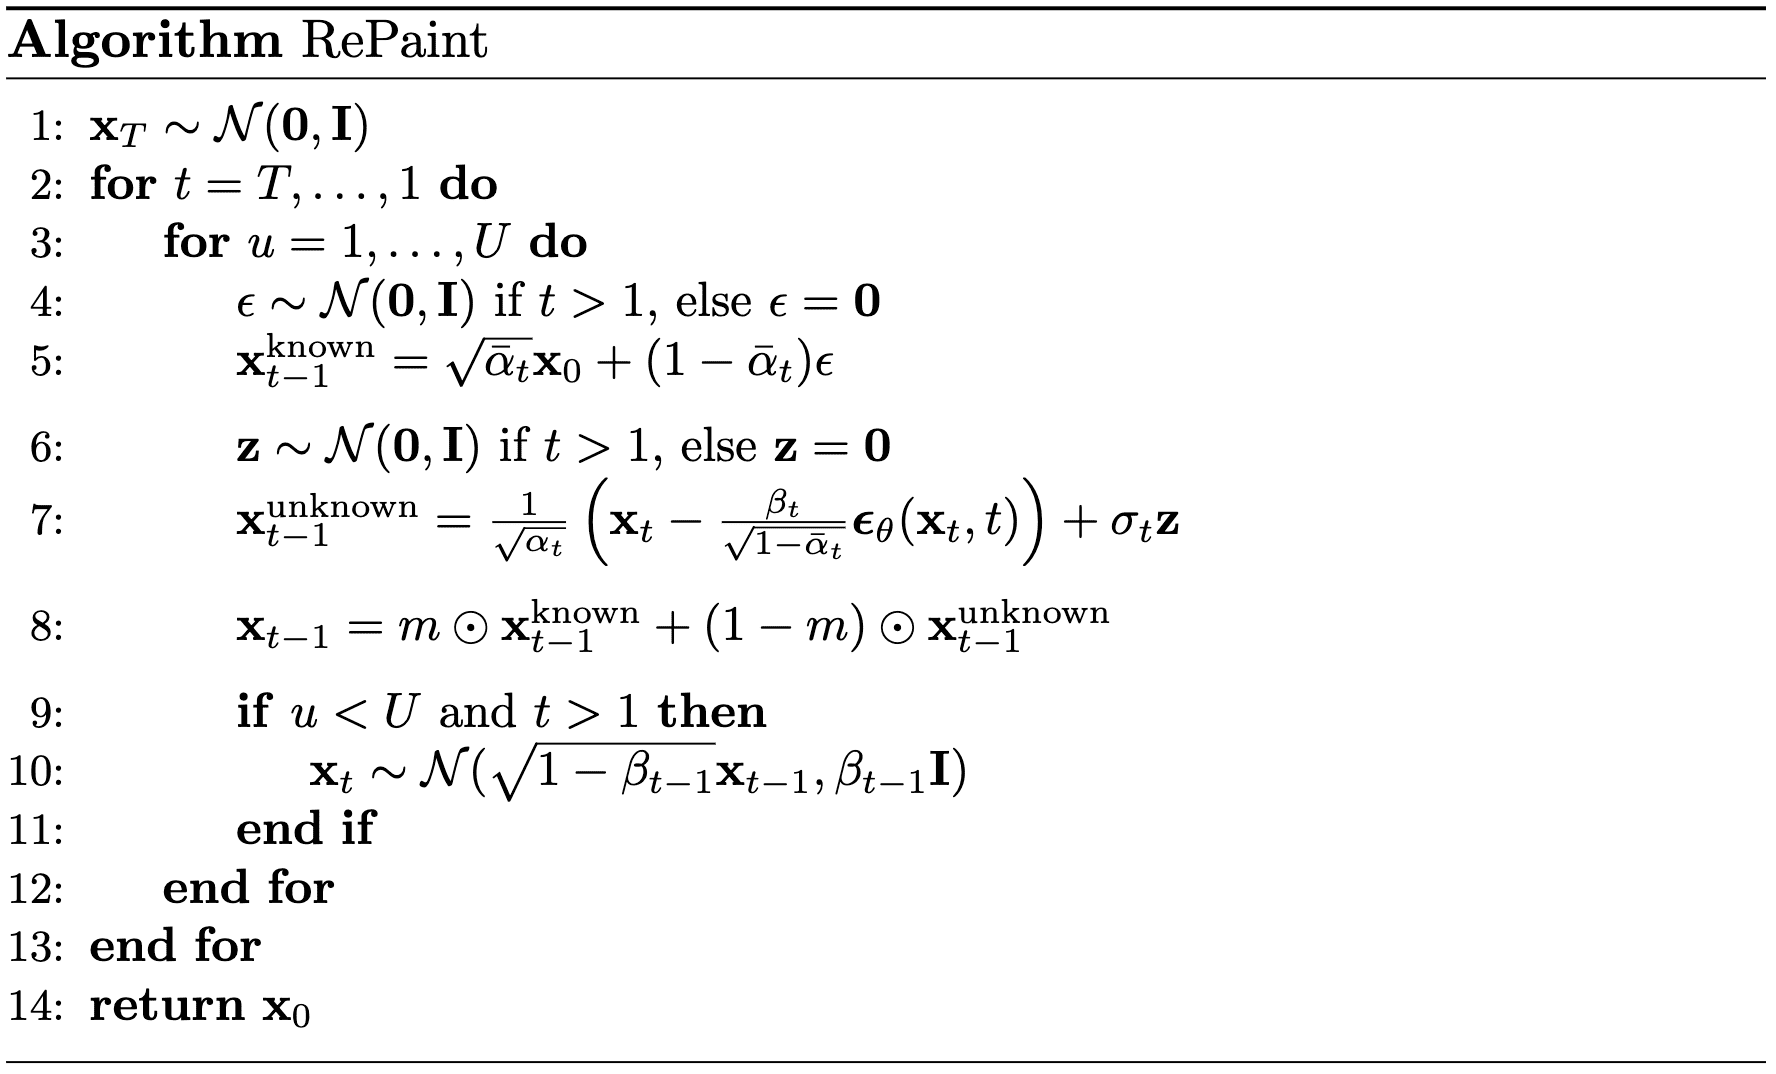 Pseudo-code of RePaint algorithm